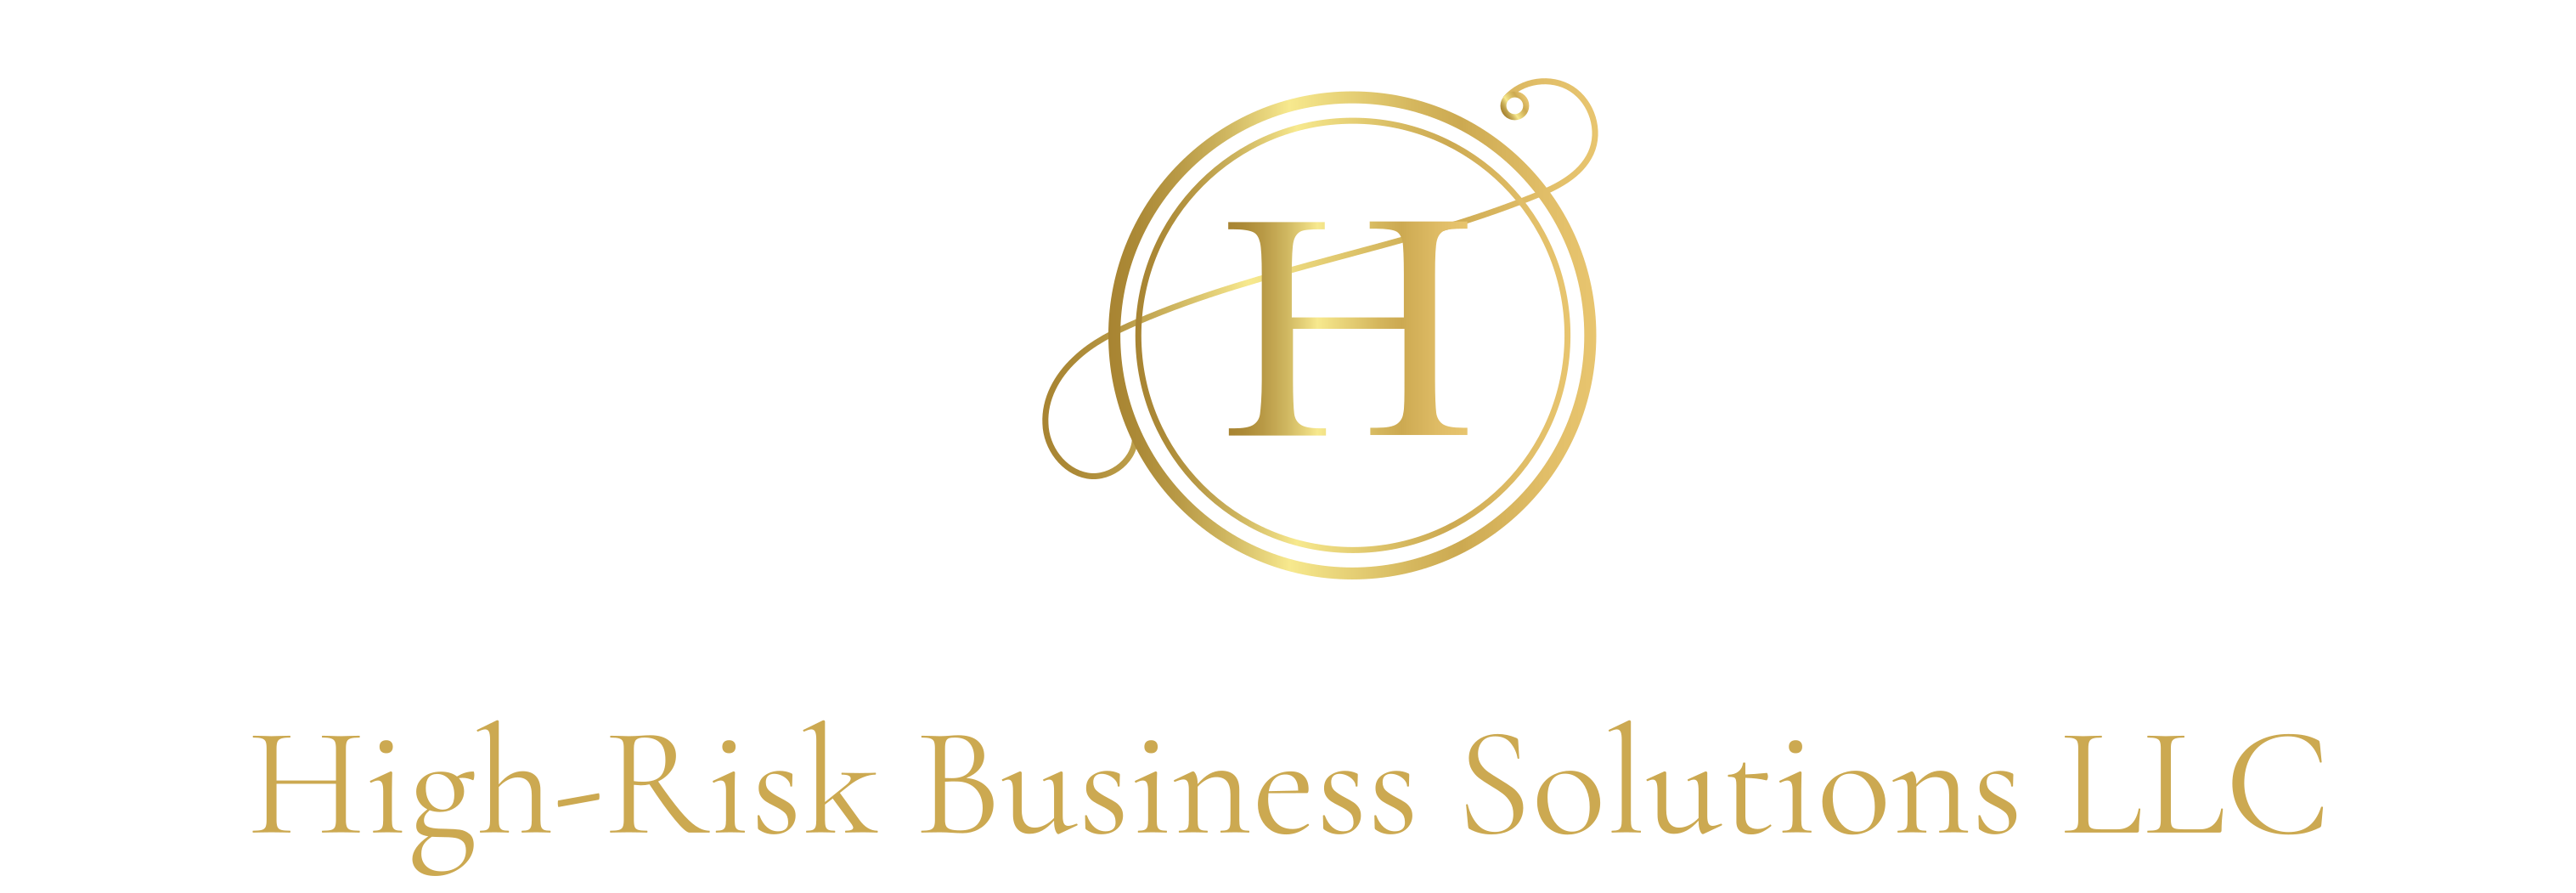 High-Risk Business Solutions LLC